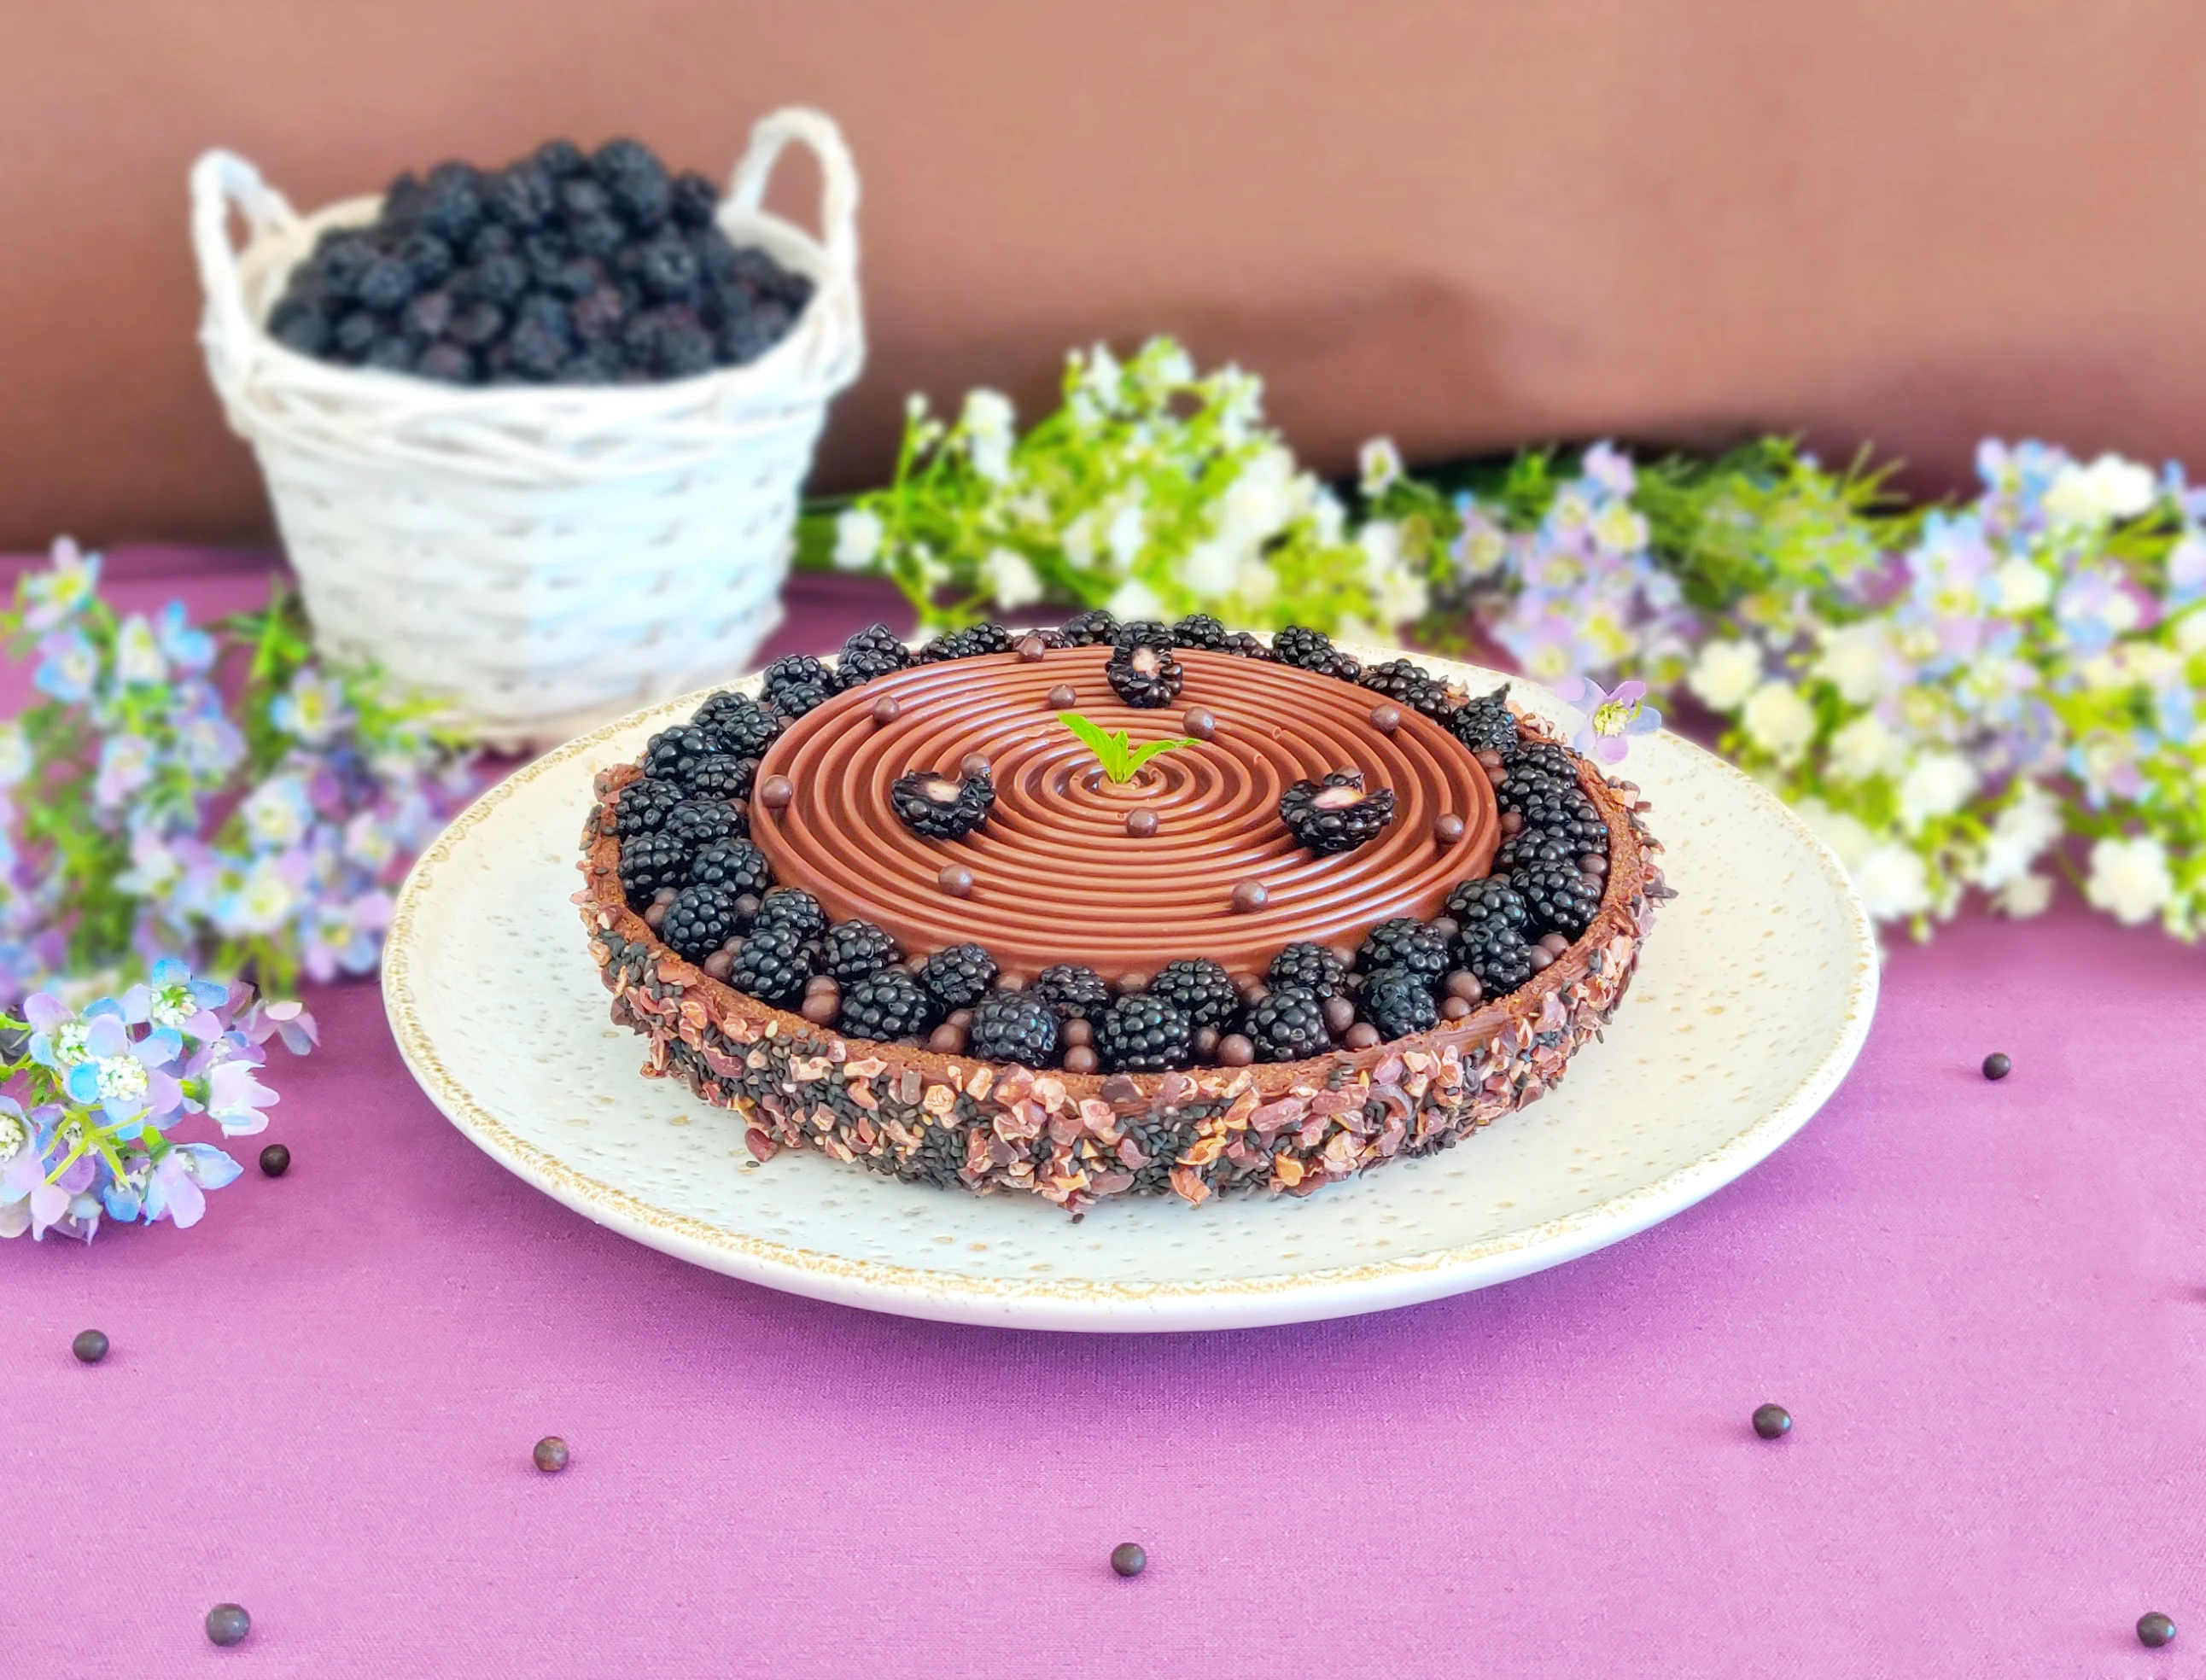 Blackberry sesame chocolate tart